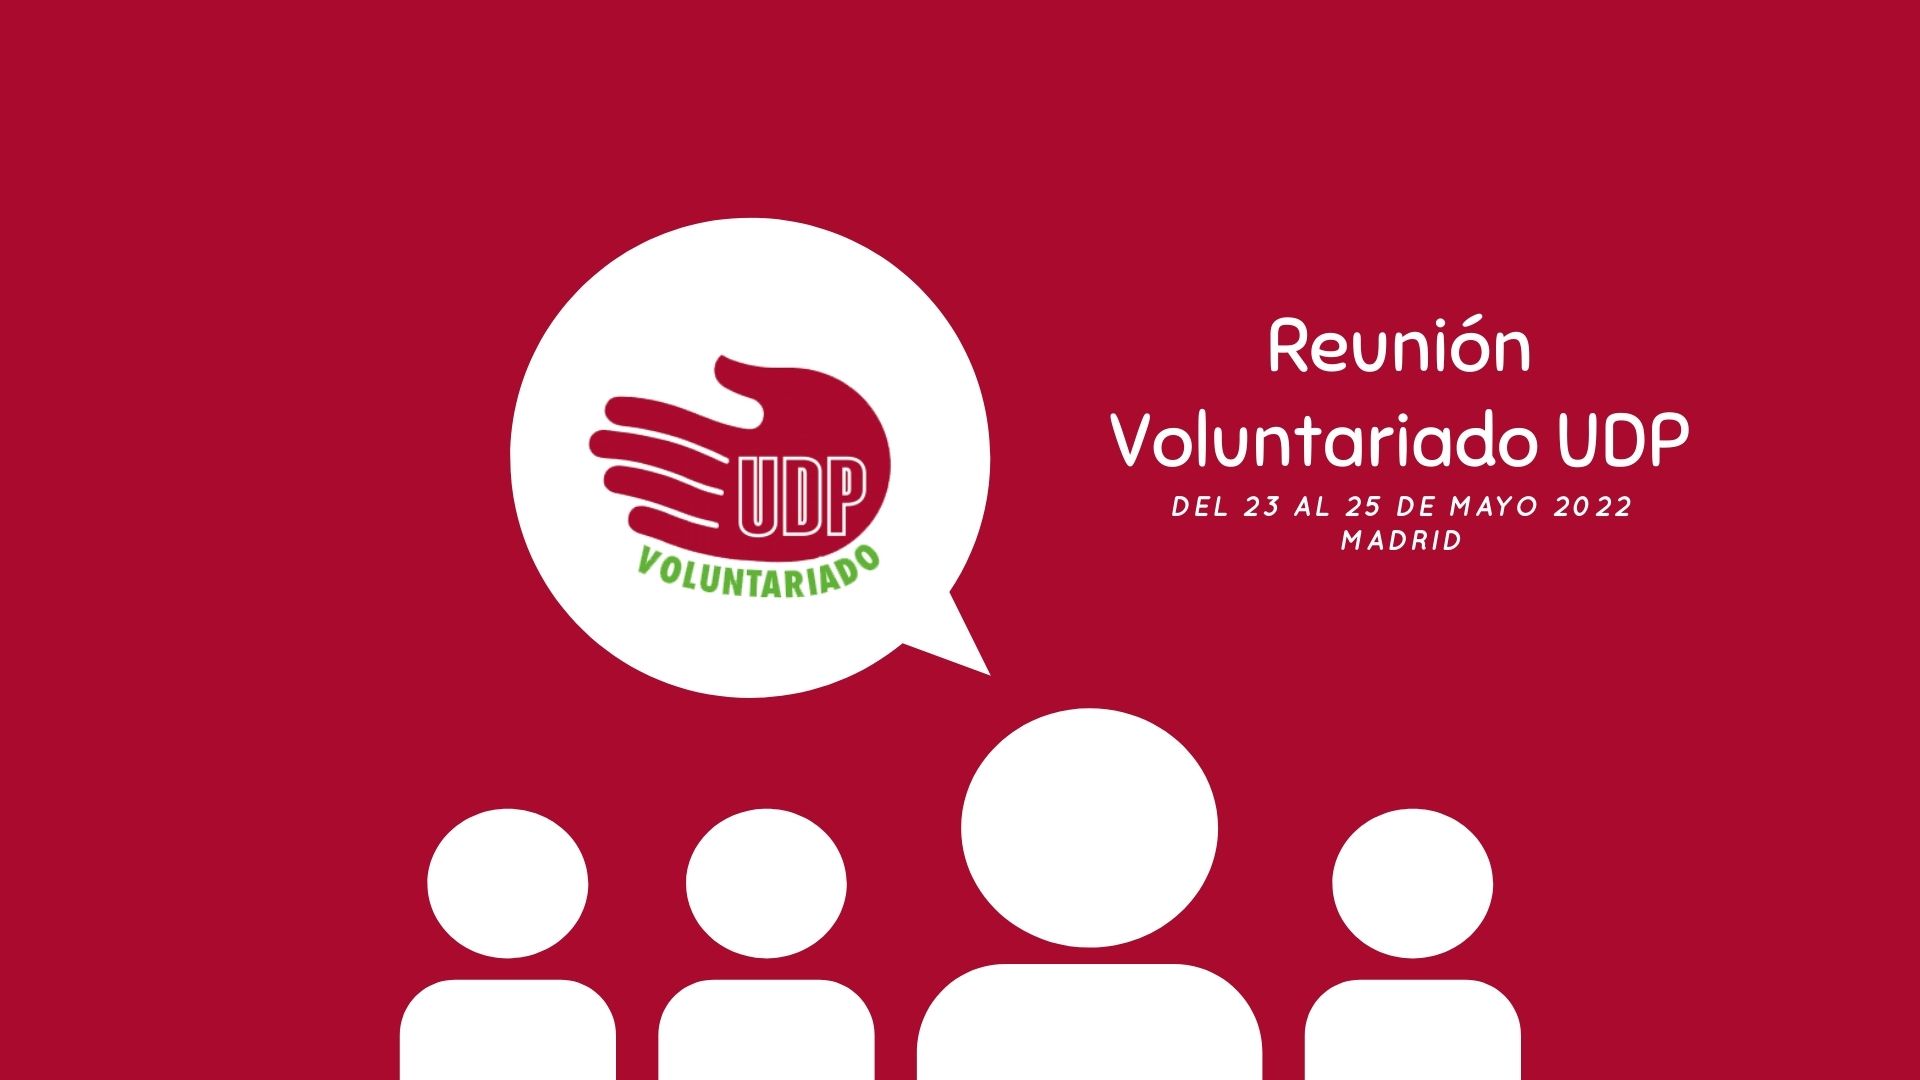 Reunión voluntariado UDP